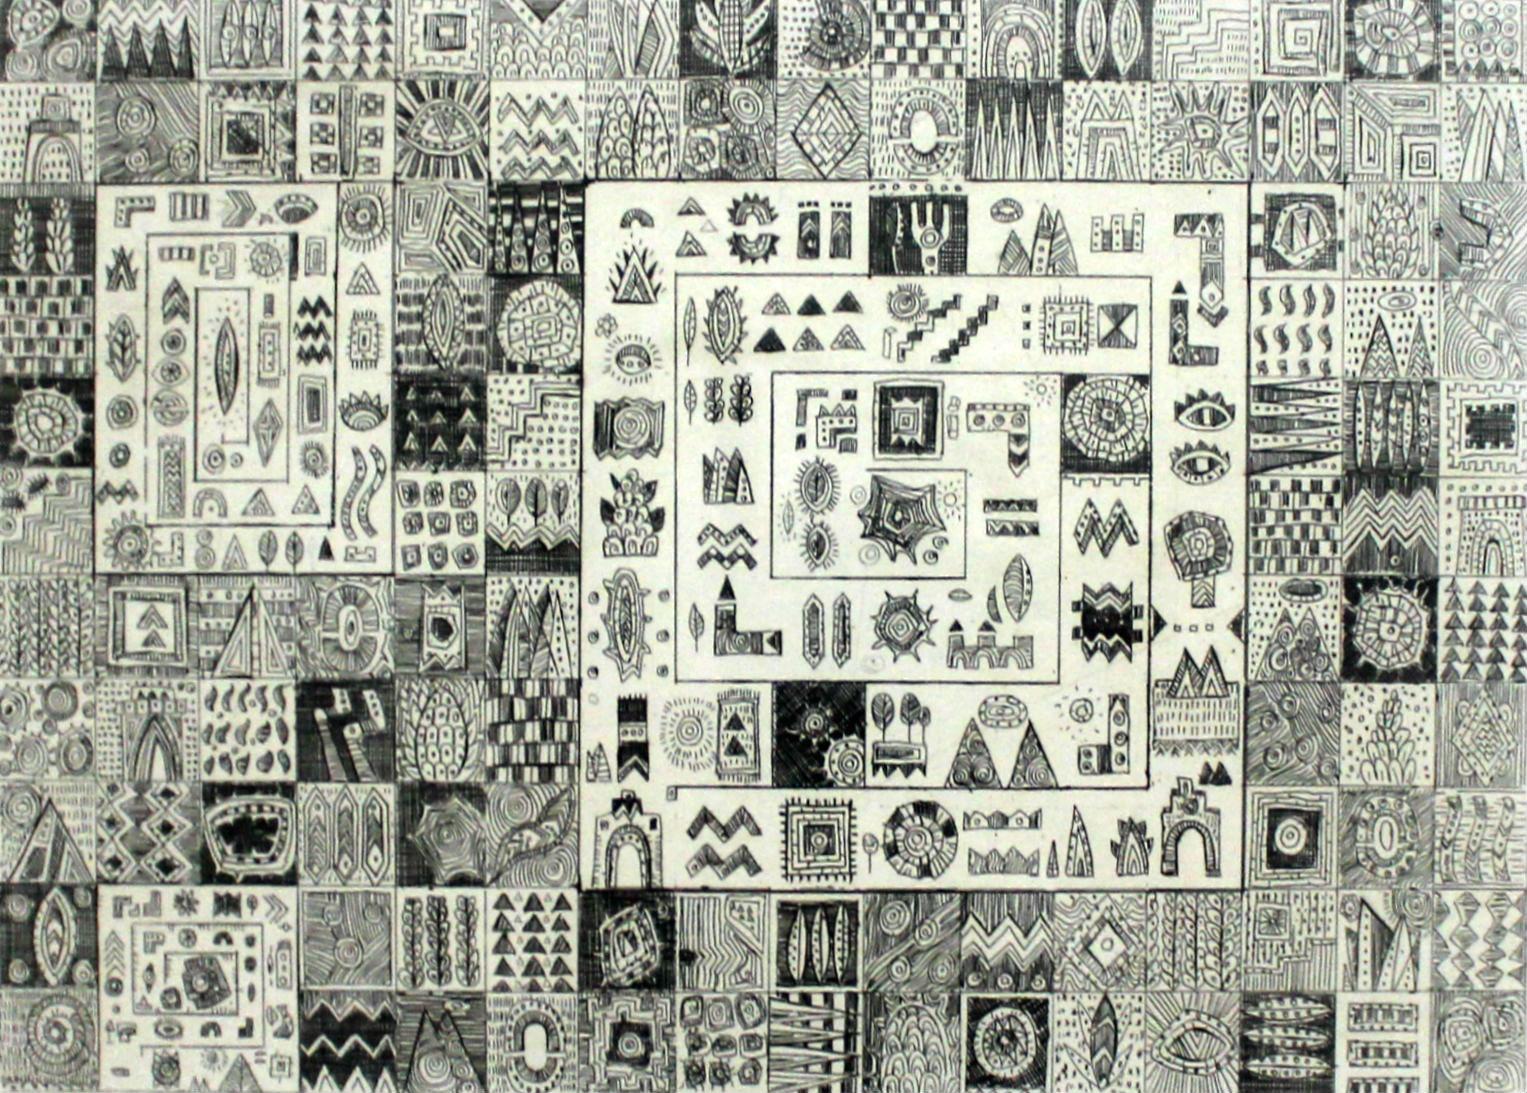 My labyrinths - XXI century Etching, Abstract & figurative, Black & white mosaic - Print by Małgorzata Jenta-Dmitruk